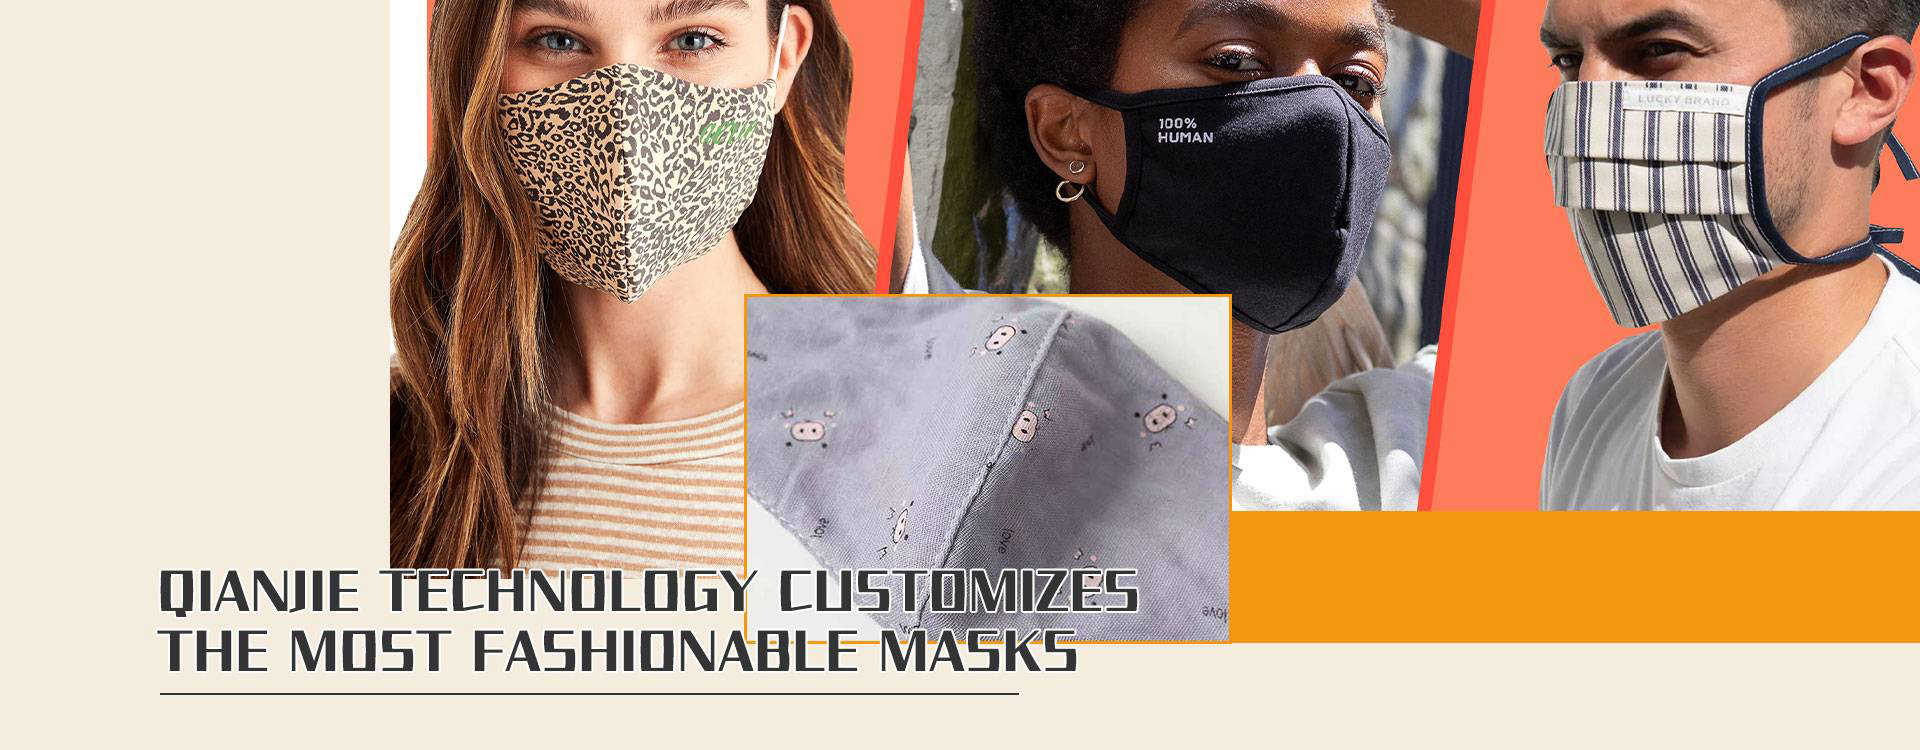 Facial Mask, Medicial Mask, N95 Mask - QianJie